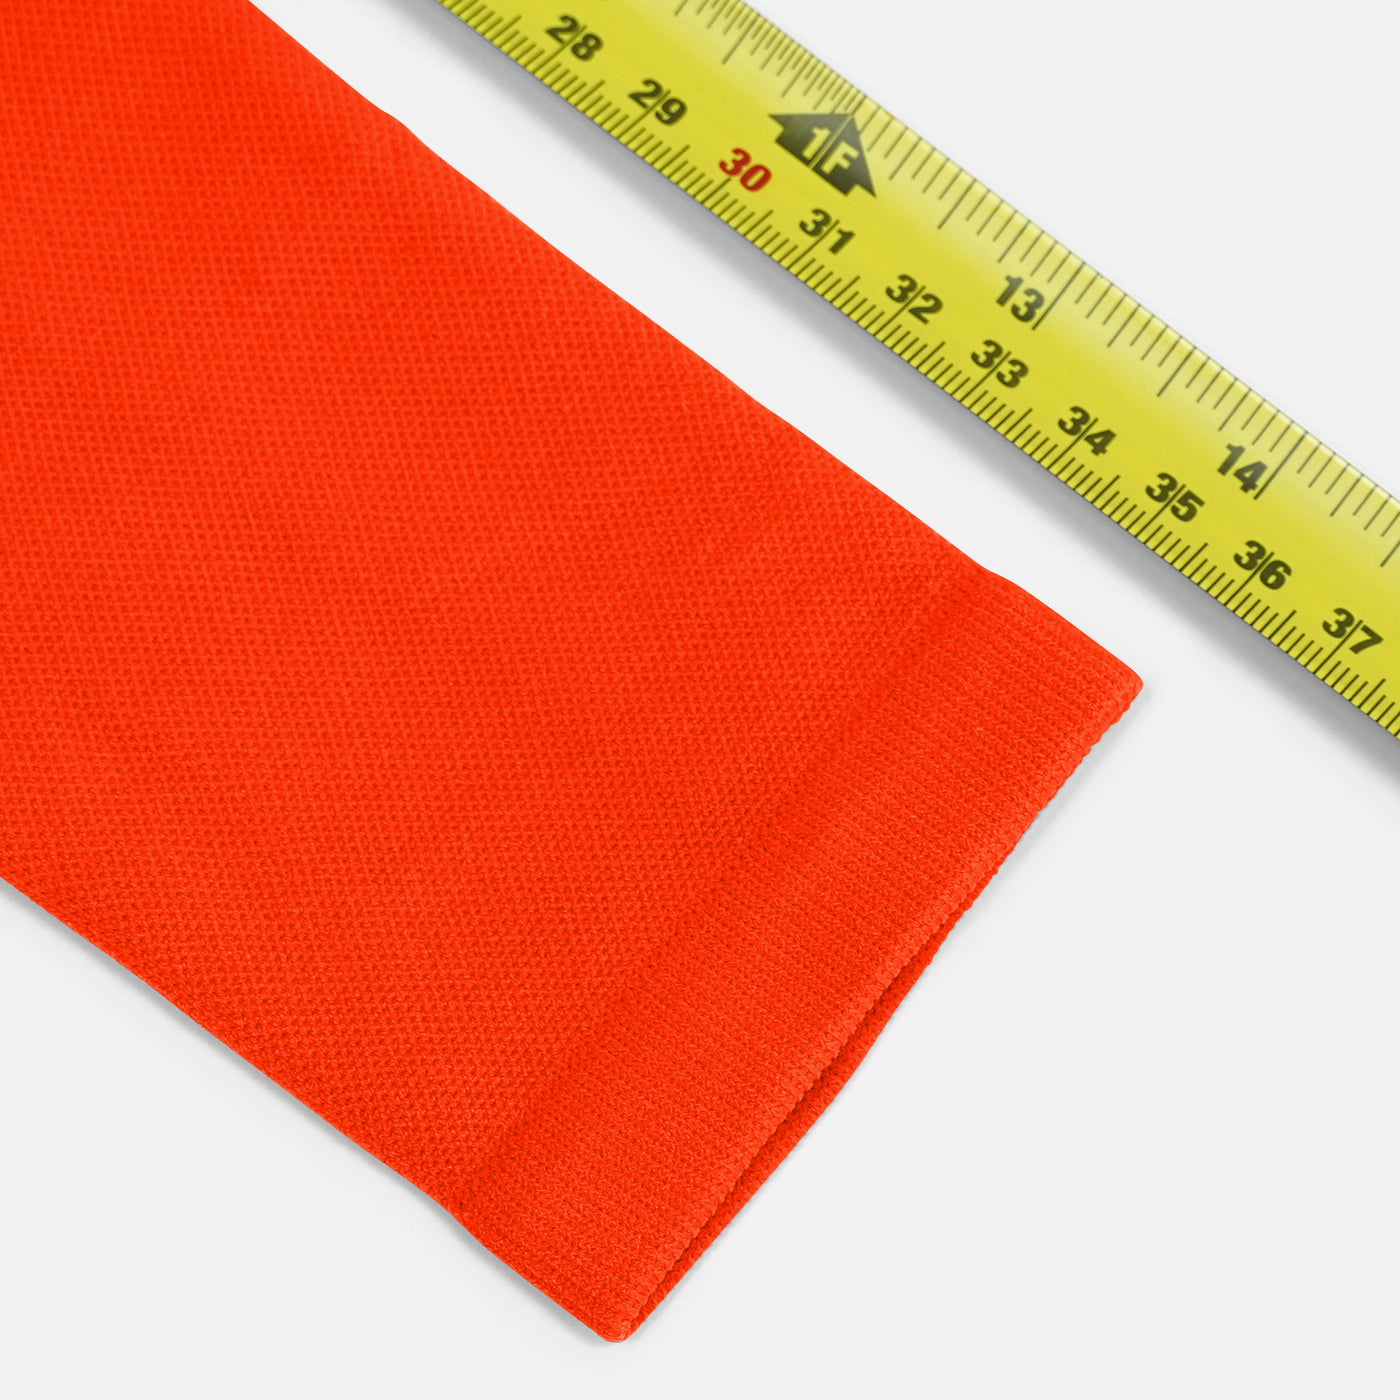 Hue Orange One Size Fits All Arm Sleeve